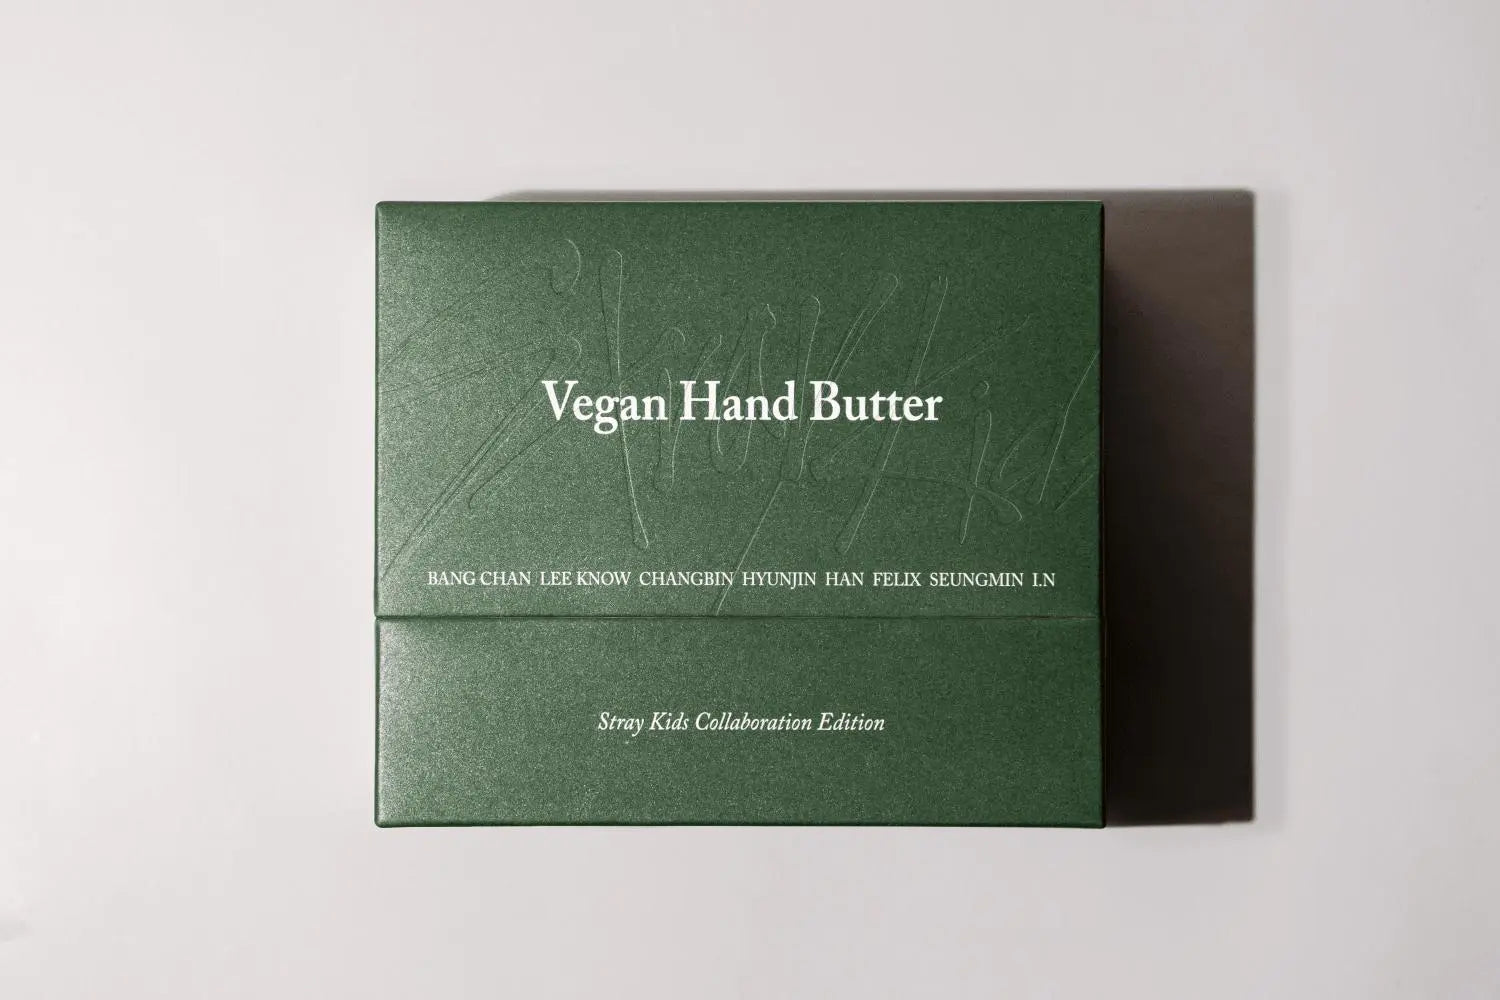 NACIFC x Stray Kids Vegan Hand Butter [Nacific]